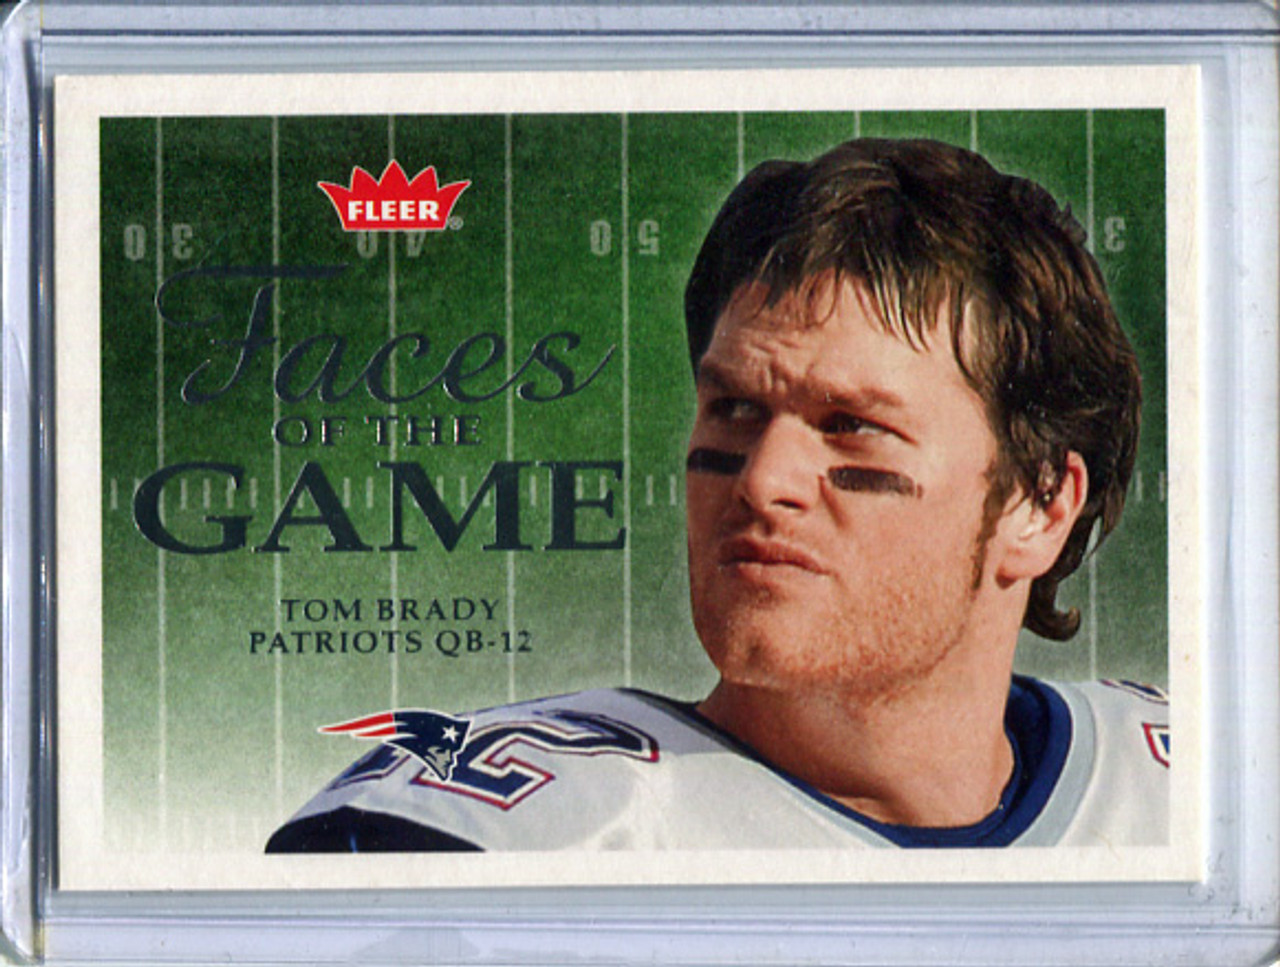 Tom Brady 2006 Fleer, Faces of the Game #FG-TB